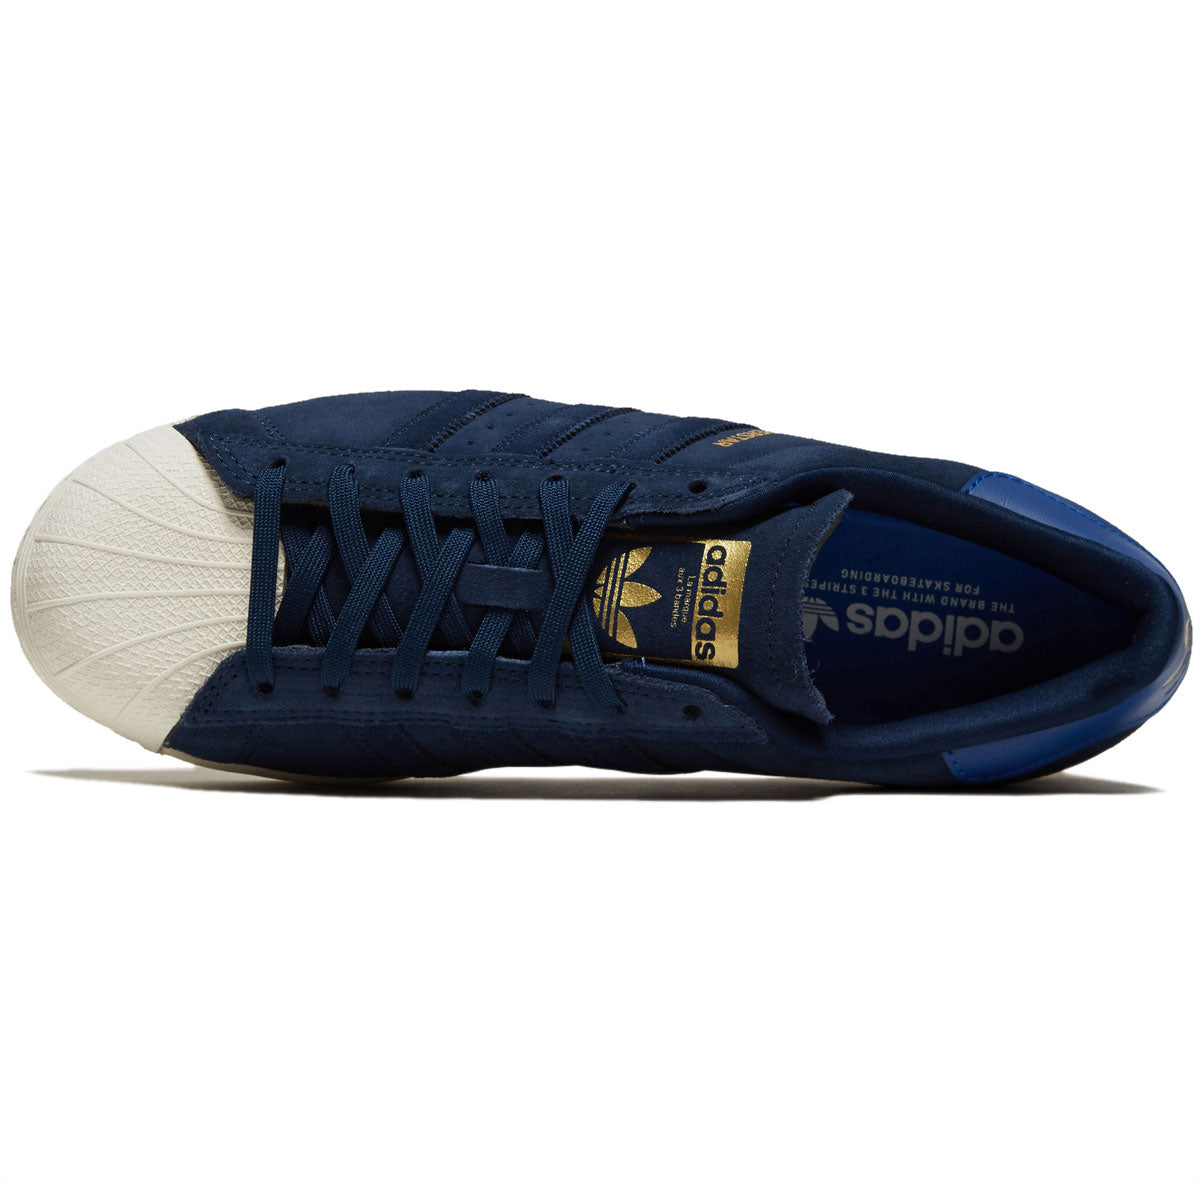 Adidas Superstar ADV Shoes - Supplier Colour/Team Royal Blue/Gold Metallic image 3